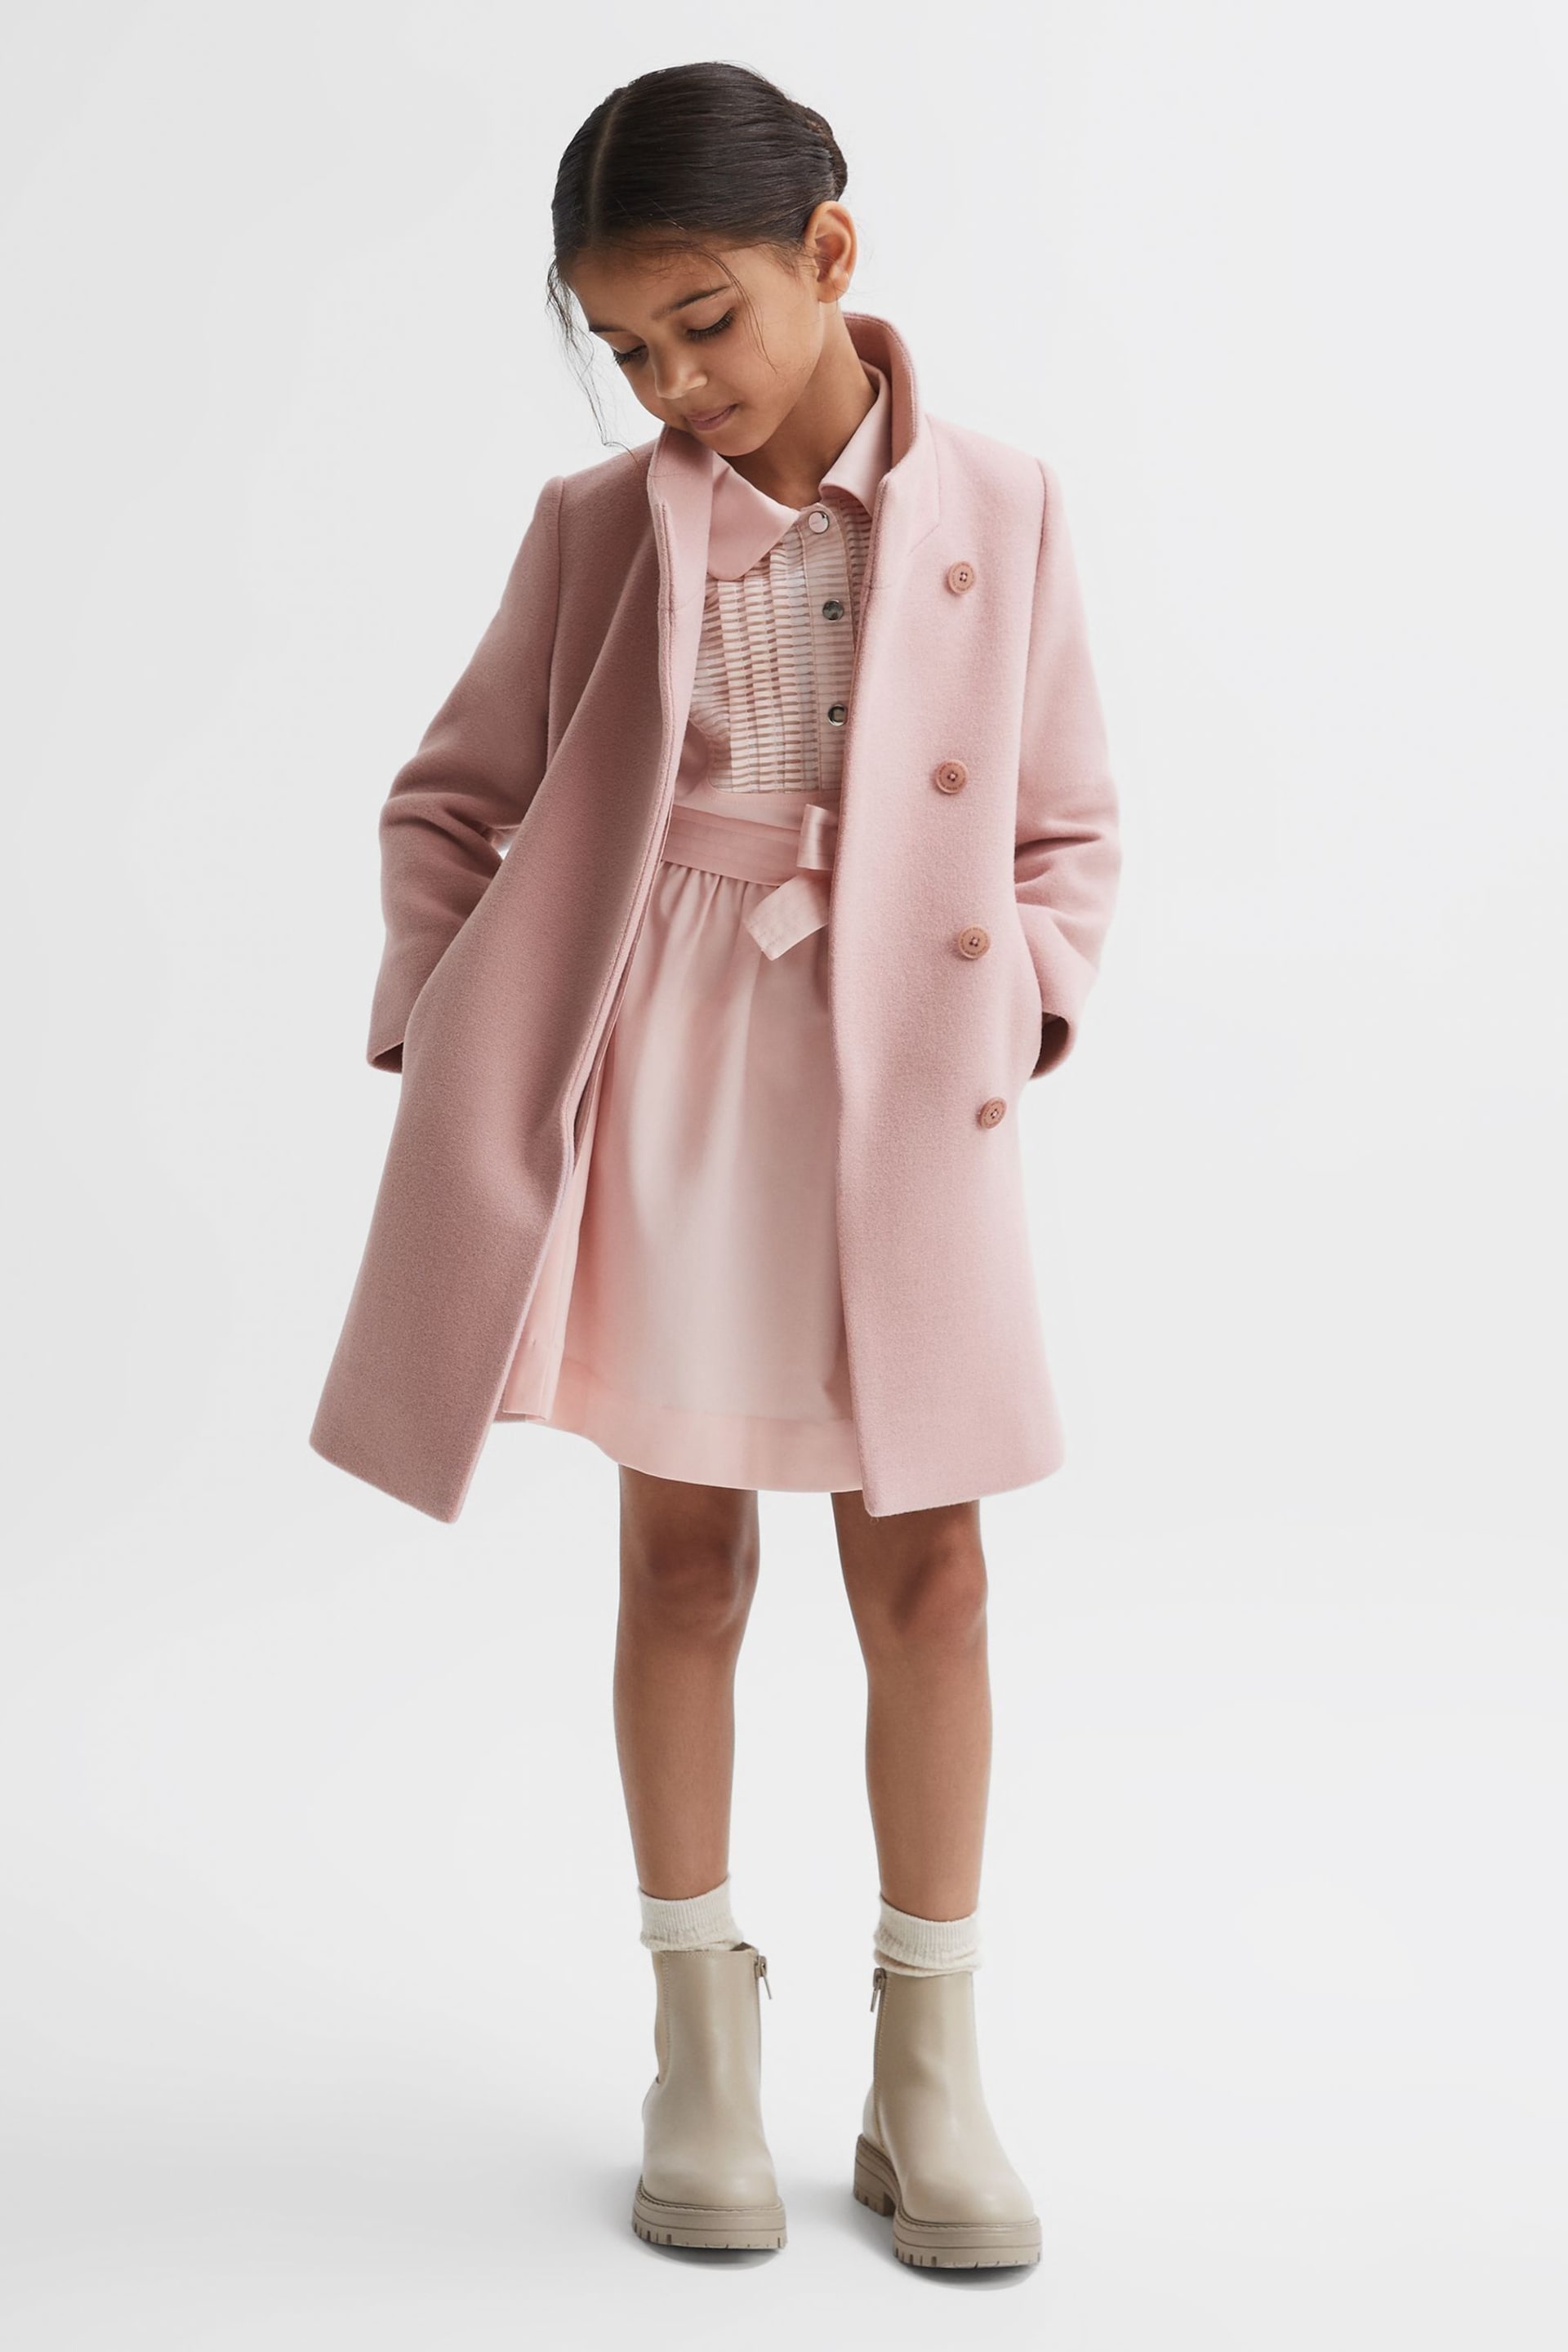 Reiss Pink Kia Junior Wool Blend Funnel Neck Coat - Image 3 of 6